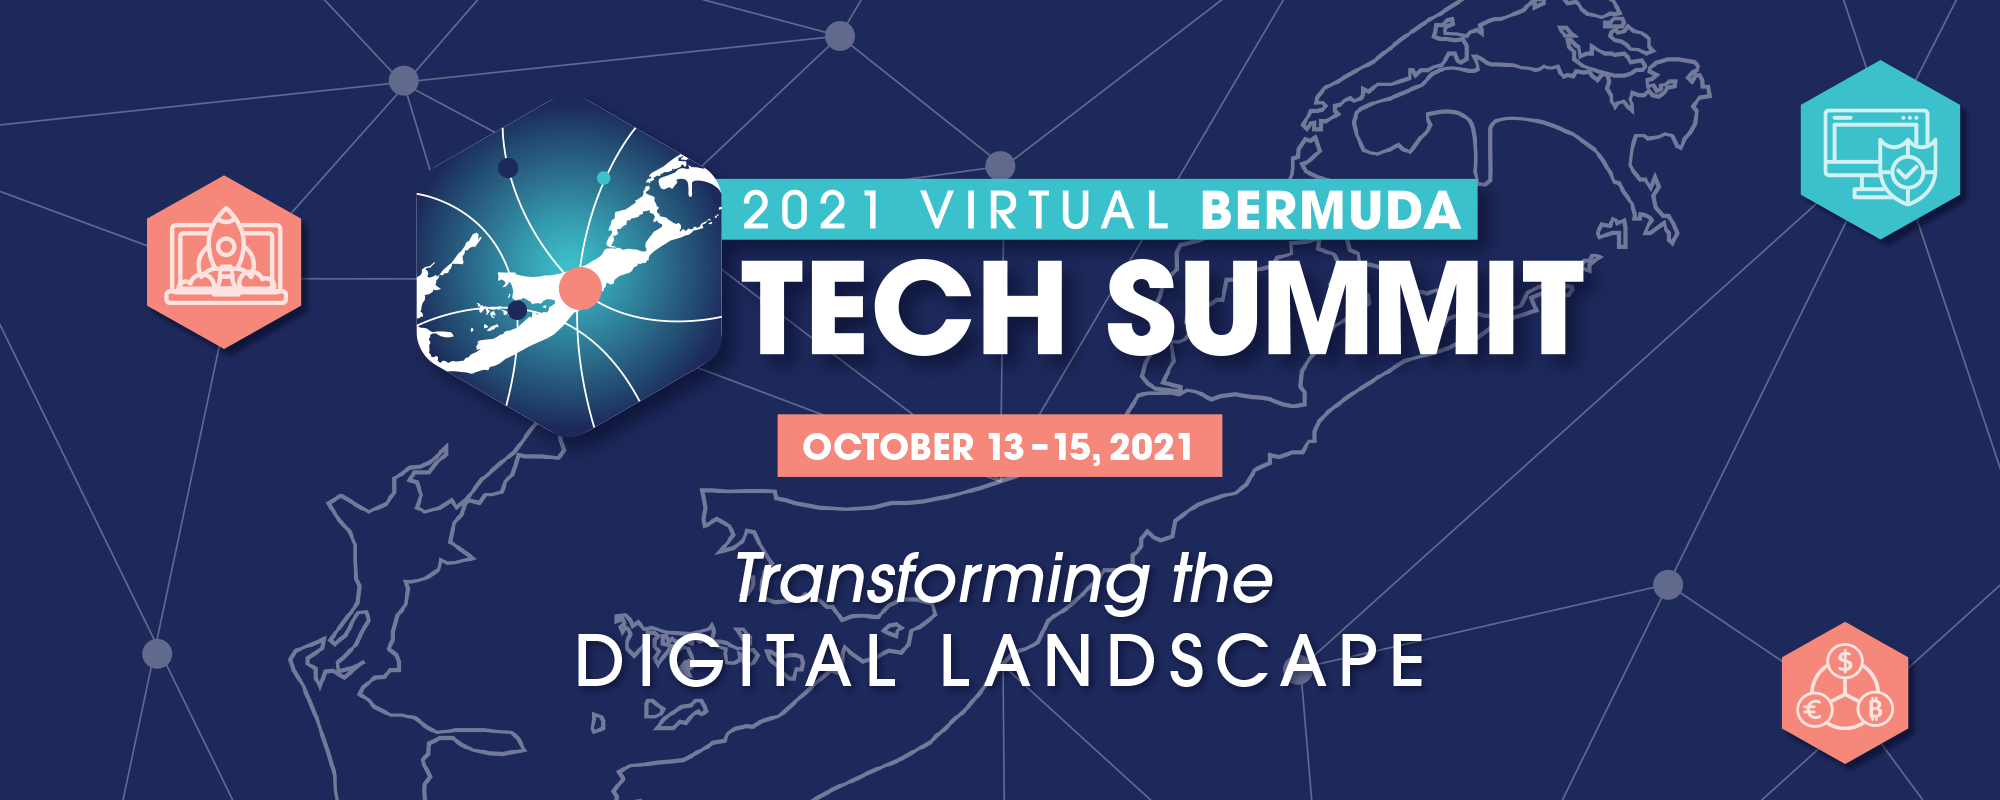 Bermuda Virtual Tech Summit 2021 Kicks Off Tomorrow